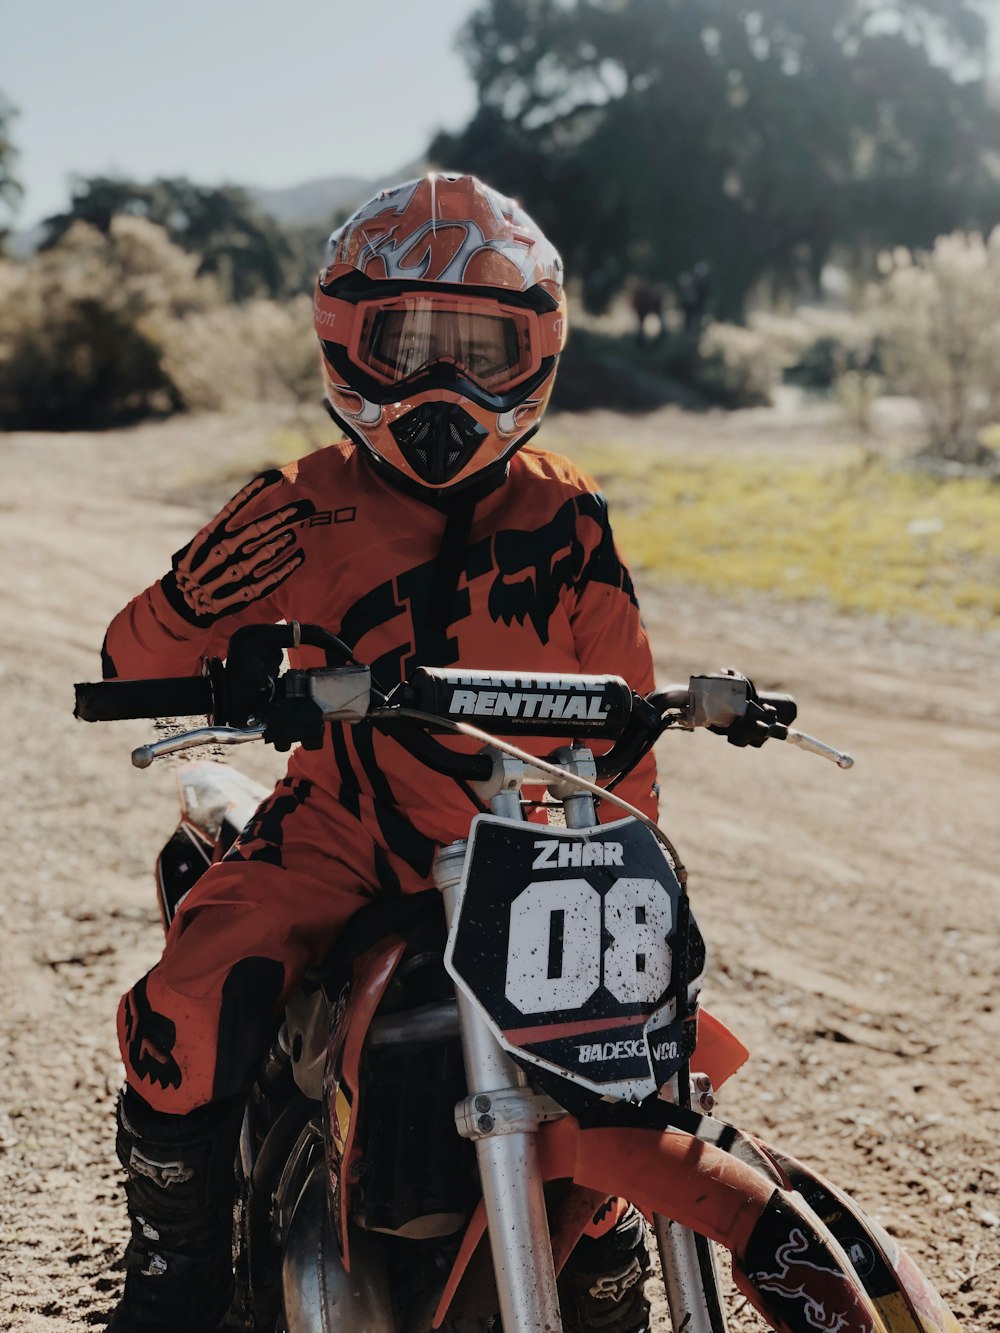 Foto Hombre en traje de motocross naranja y negro montando moto de motocross  – Imagen México gratis en Unsplash